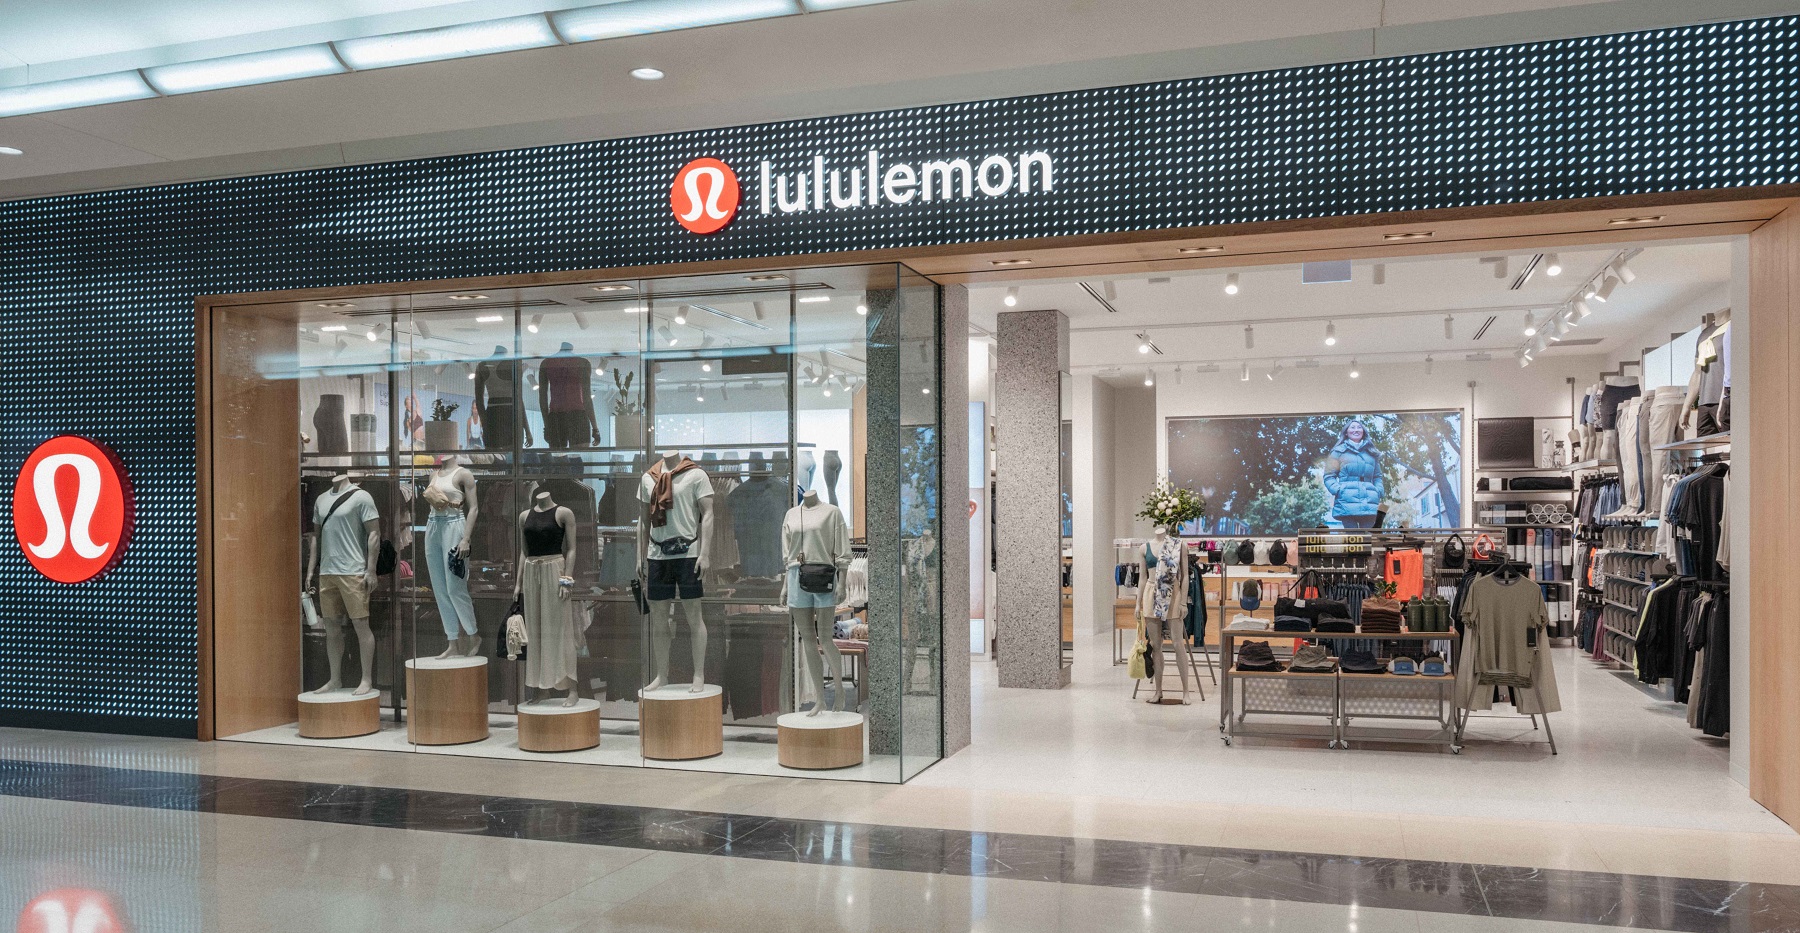 lululemon unveils new store in South Australia - retailbiz